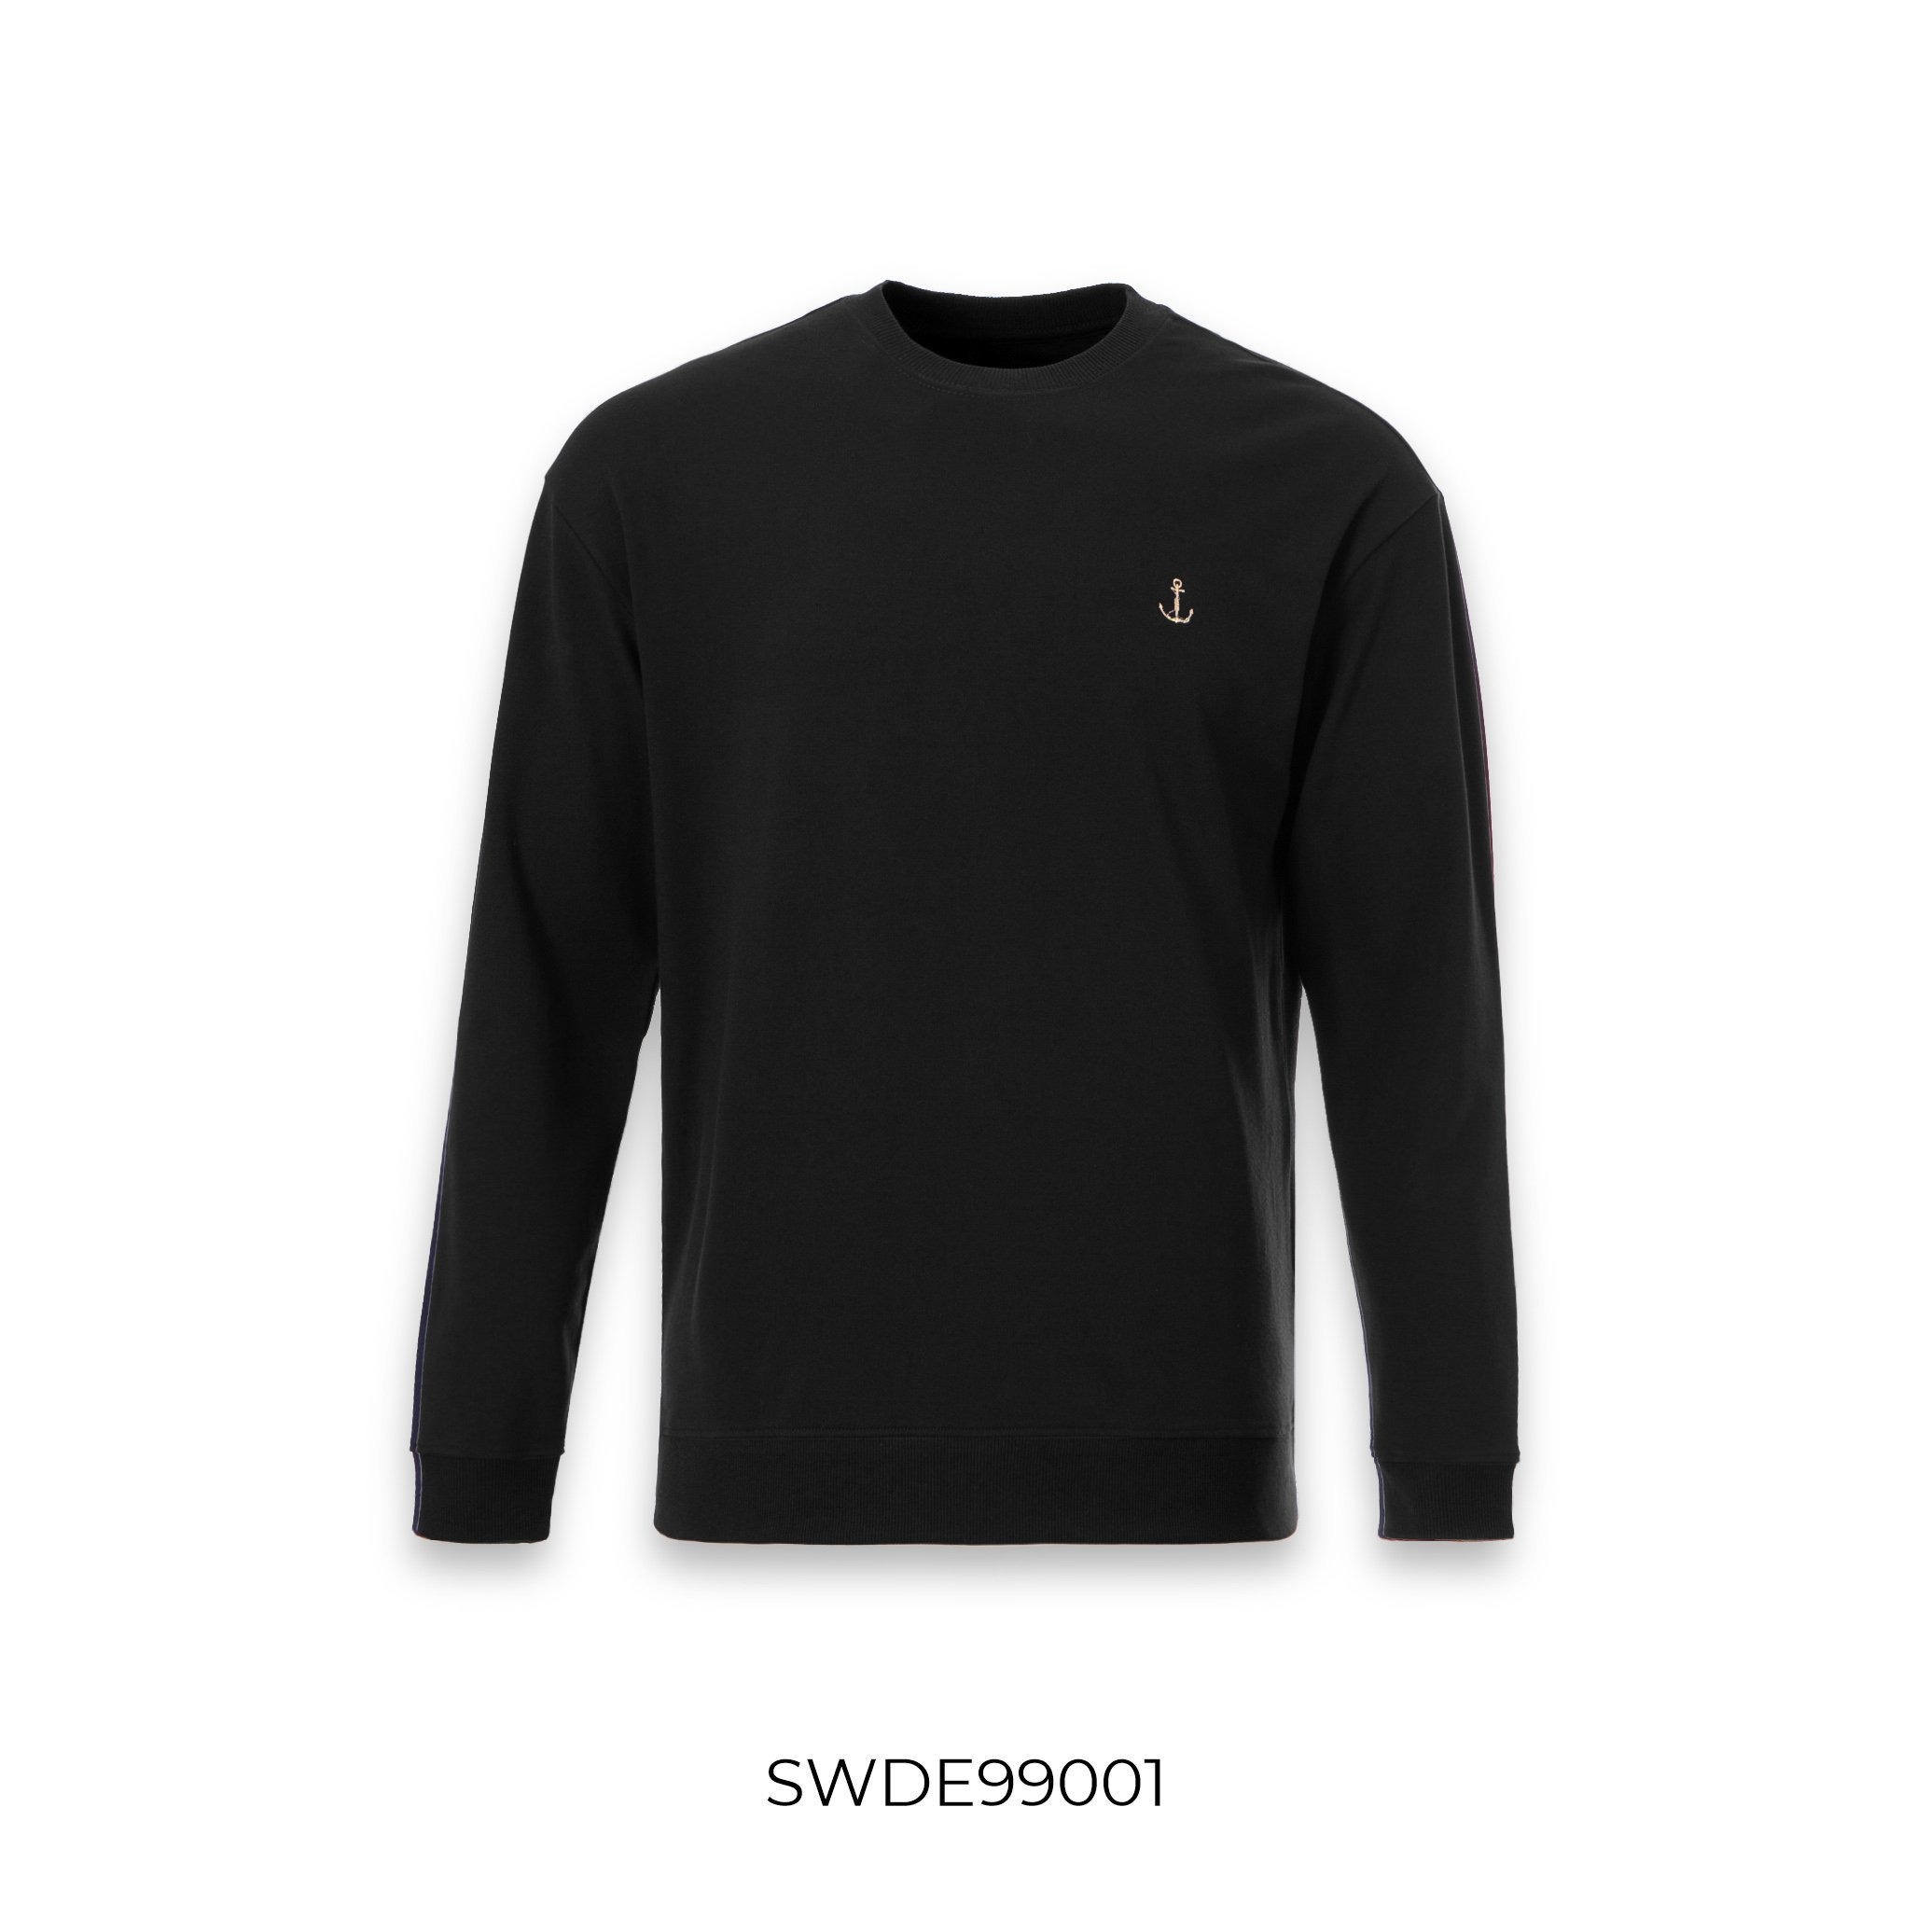 Áo sweater nam Old Sailor - O.S.L SWEATER - BLACK - SWDE99001 - đen - Big size upto 5XL